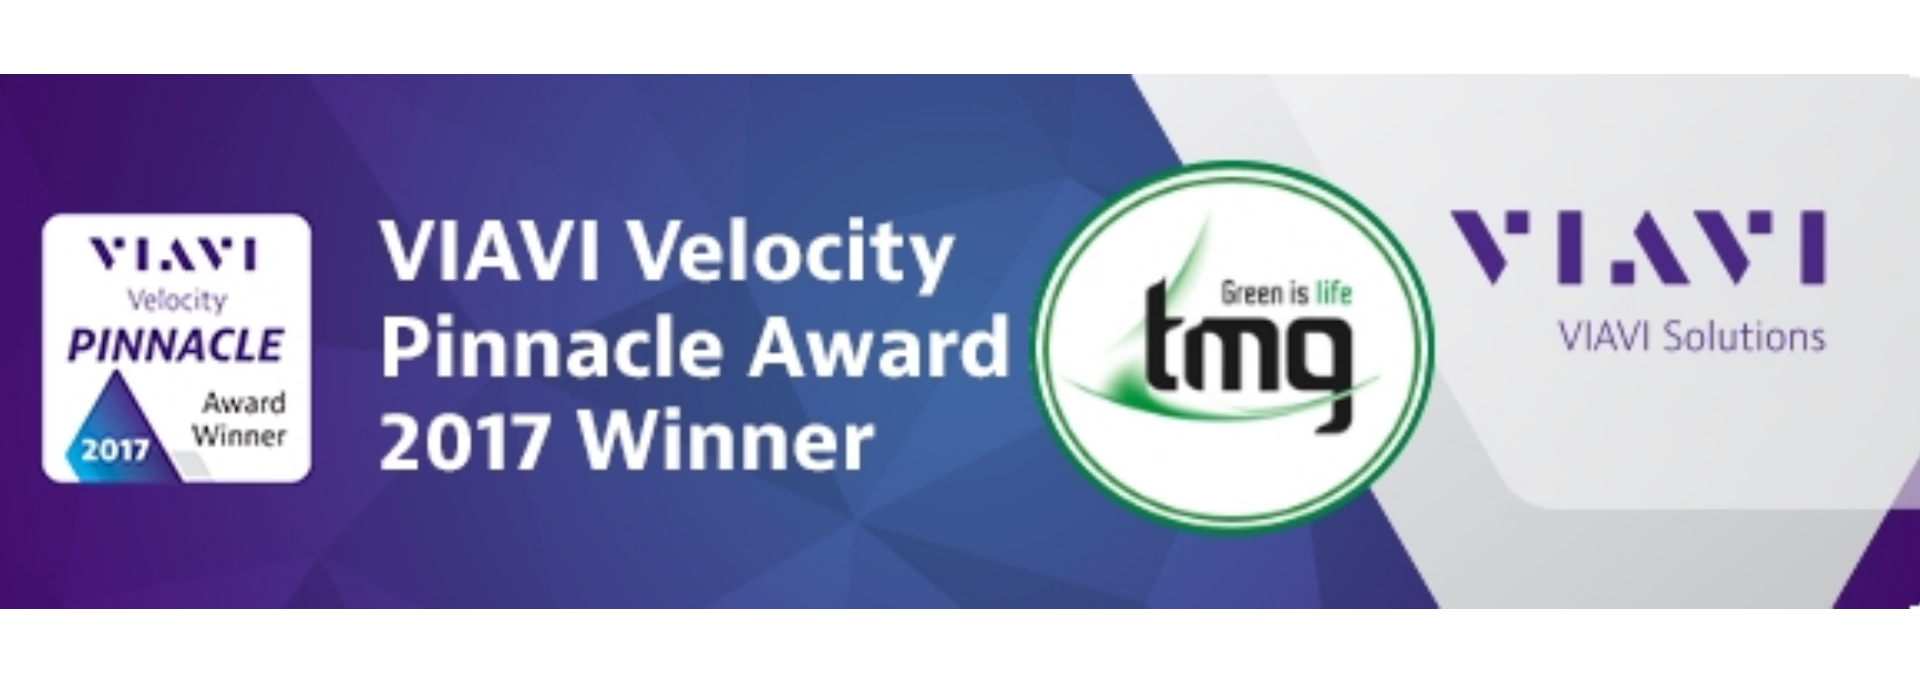 VIAVI Velocity Pinnacle Award Winner